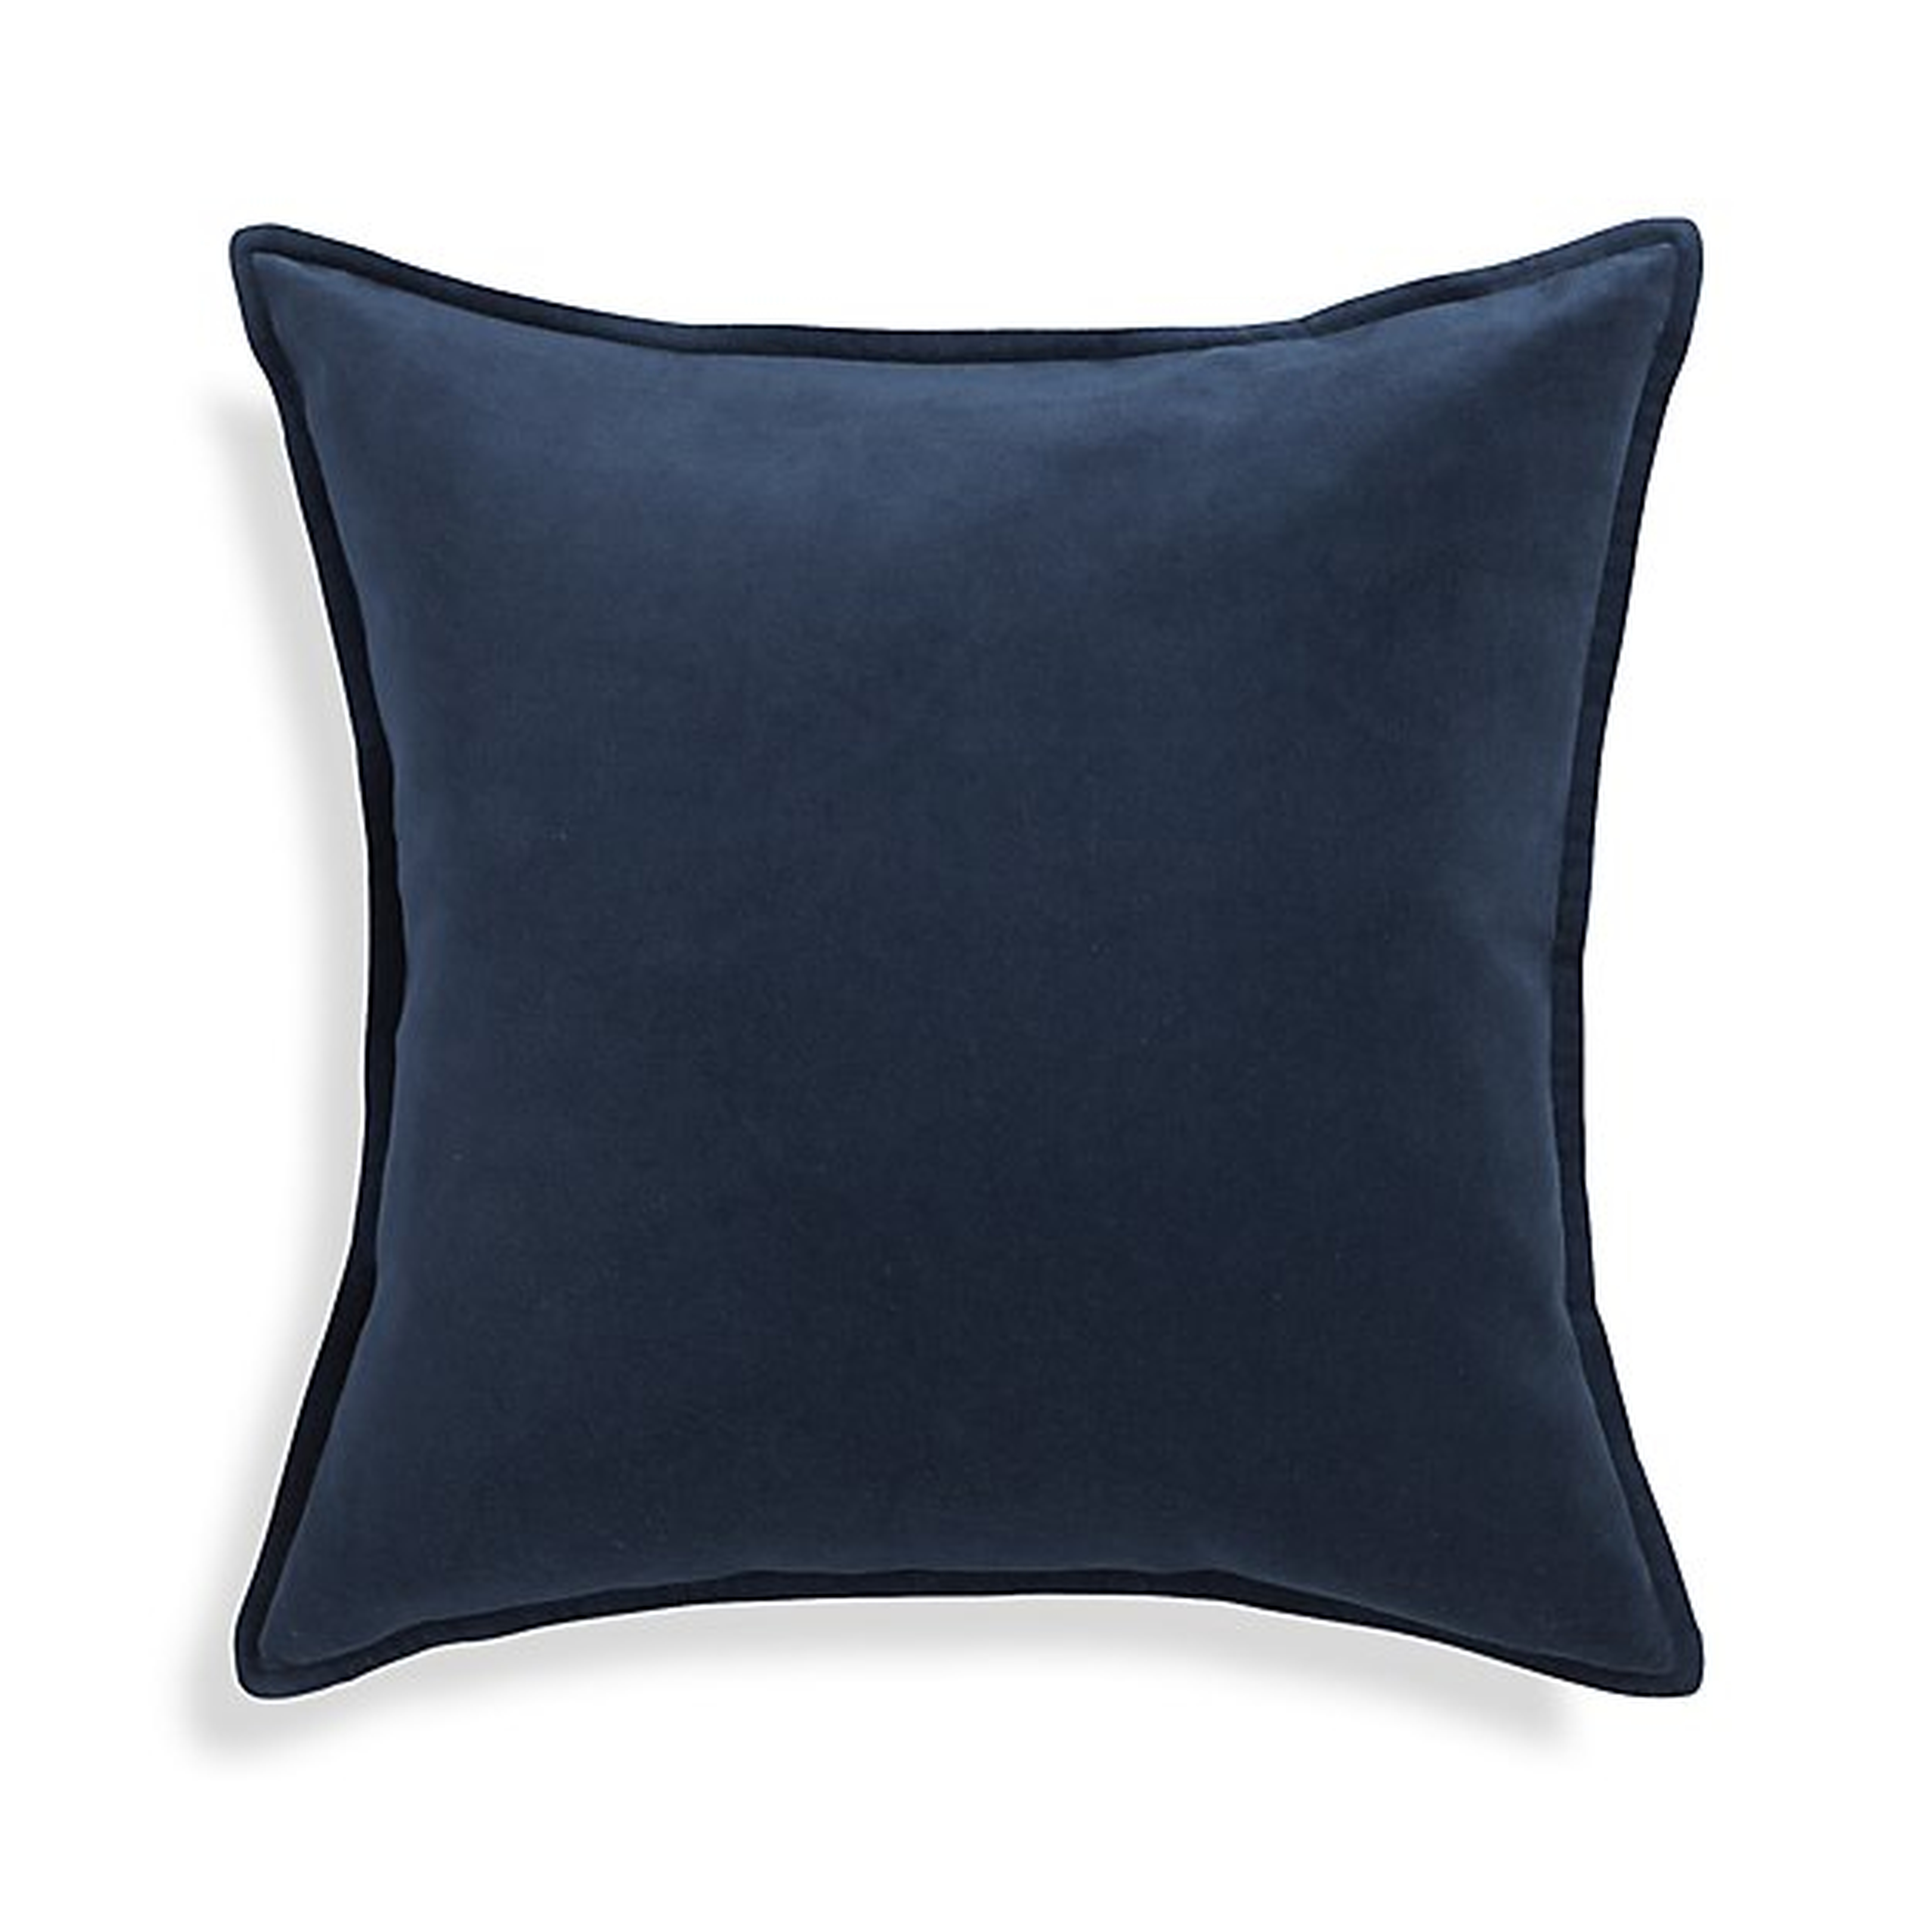 Brenner Blue Velvet Pillow - Indigo - 20x20 - With Insert - Crate and Barrel